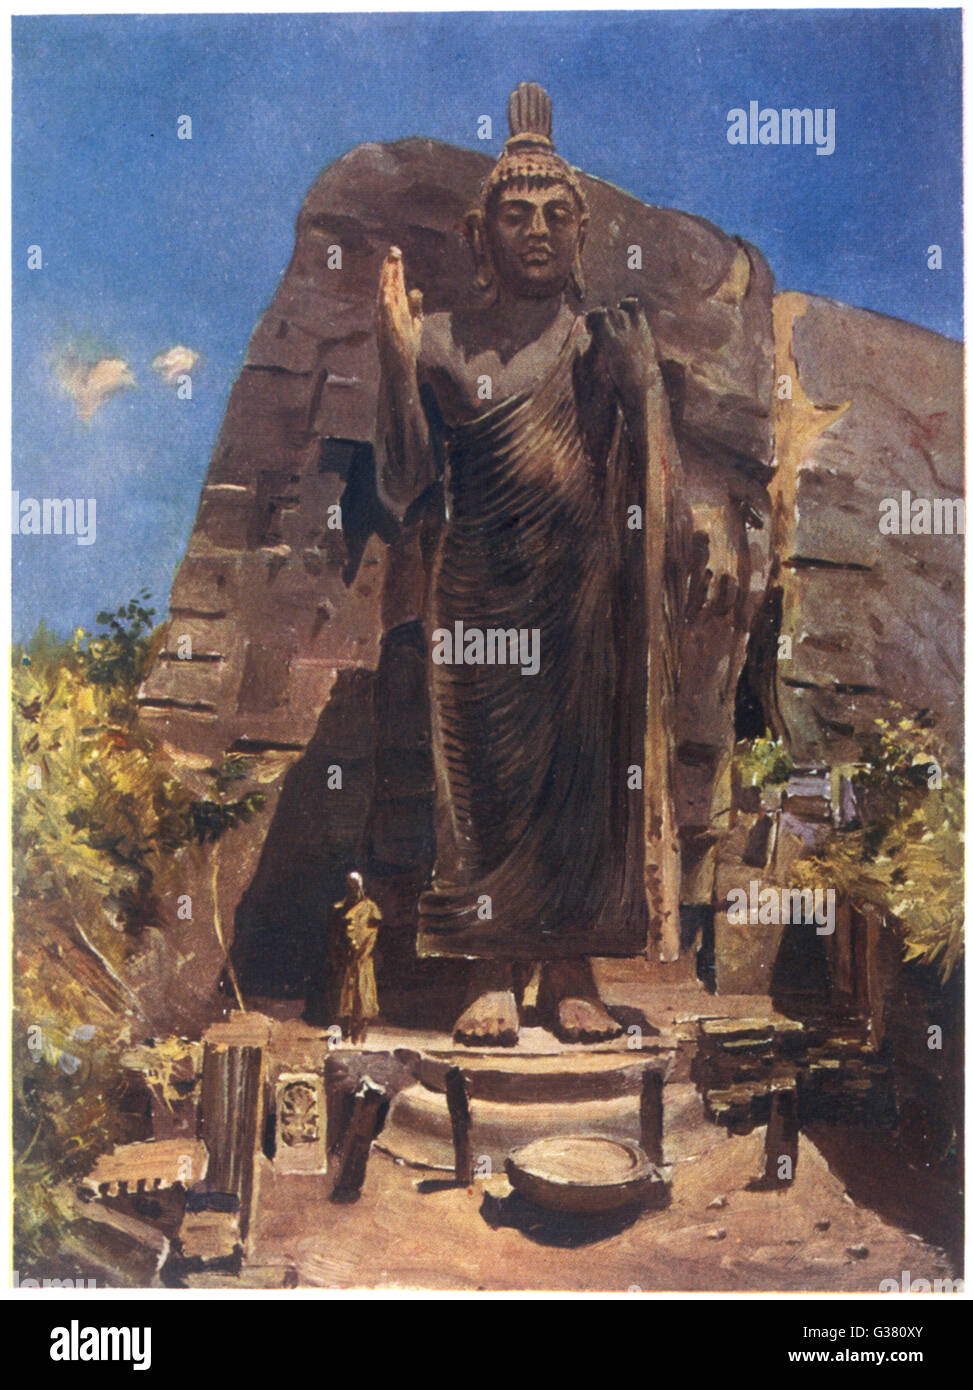 Il Buddha Siddharta Gautama una statua del Buddha in Ceylon (Sri Lanka) Data: 563? BC - 483? BC Foto Stock